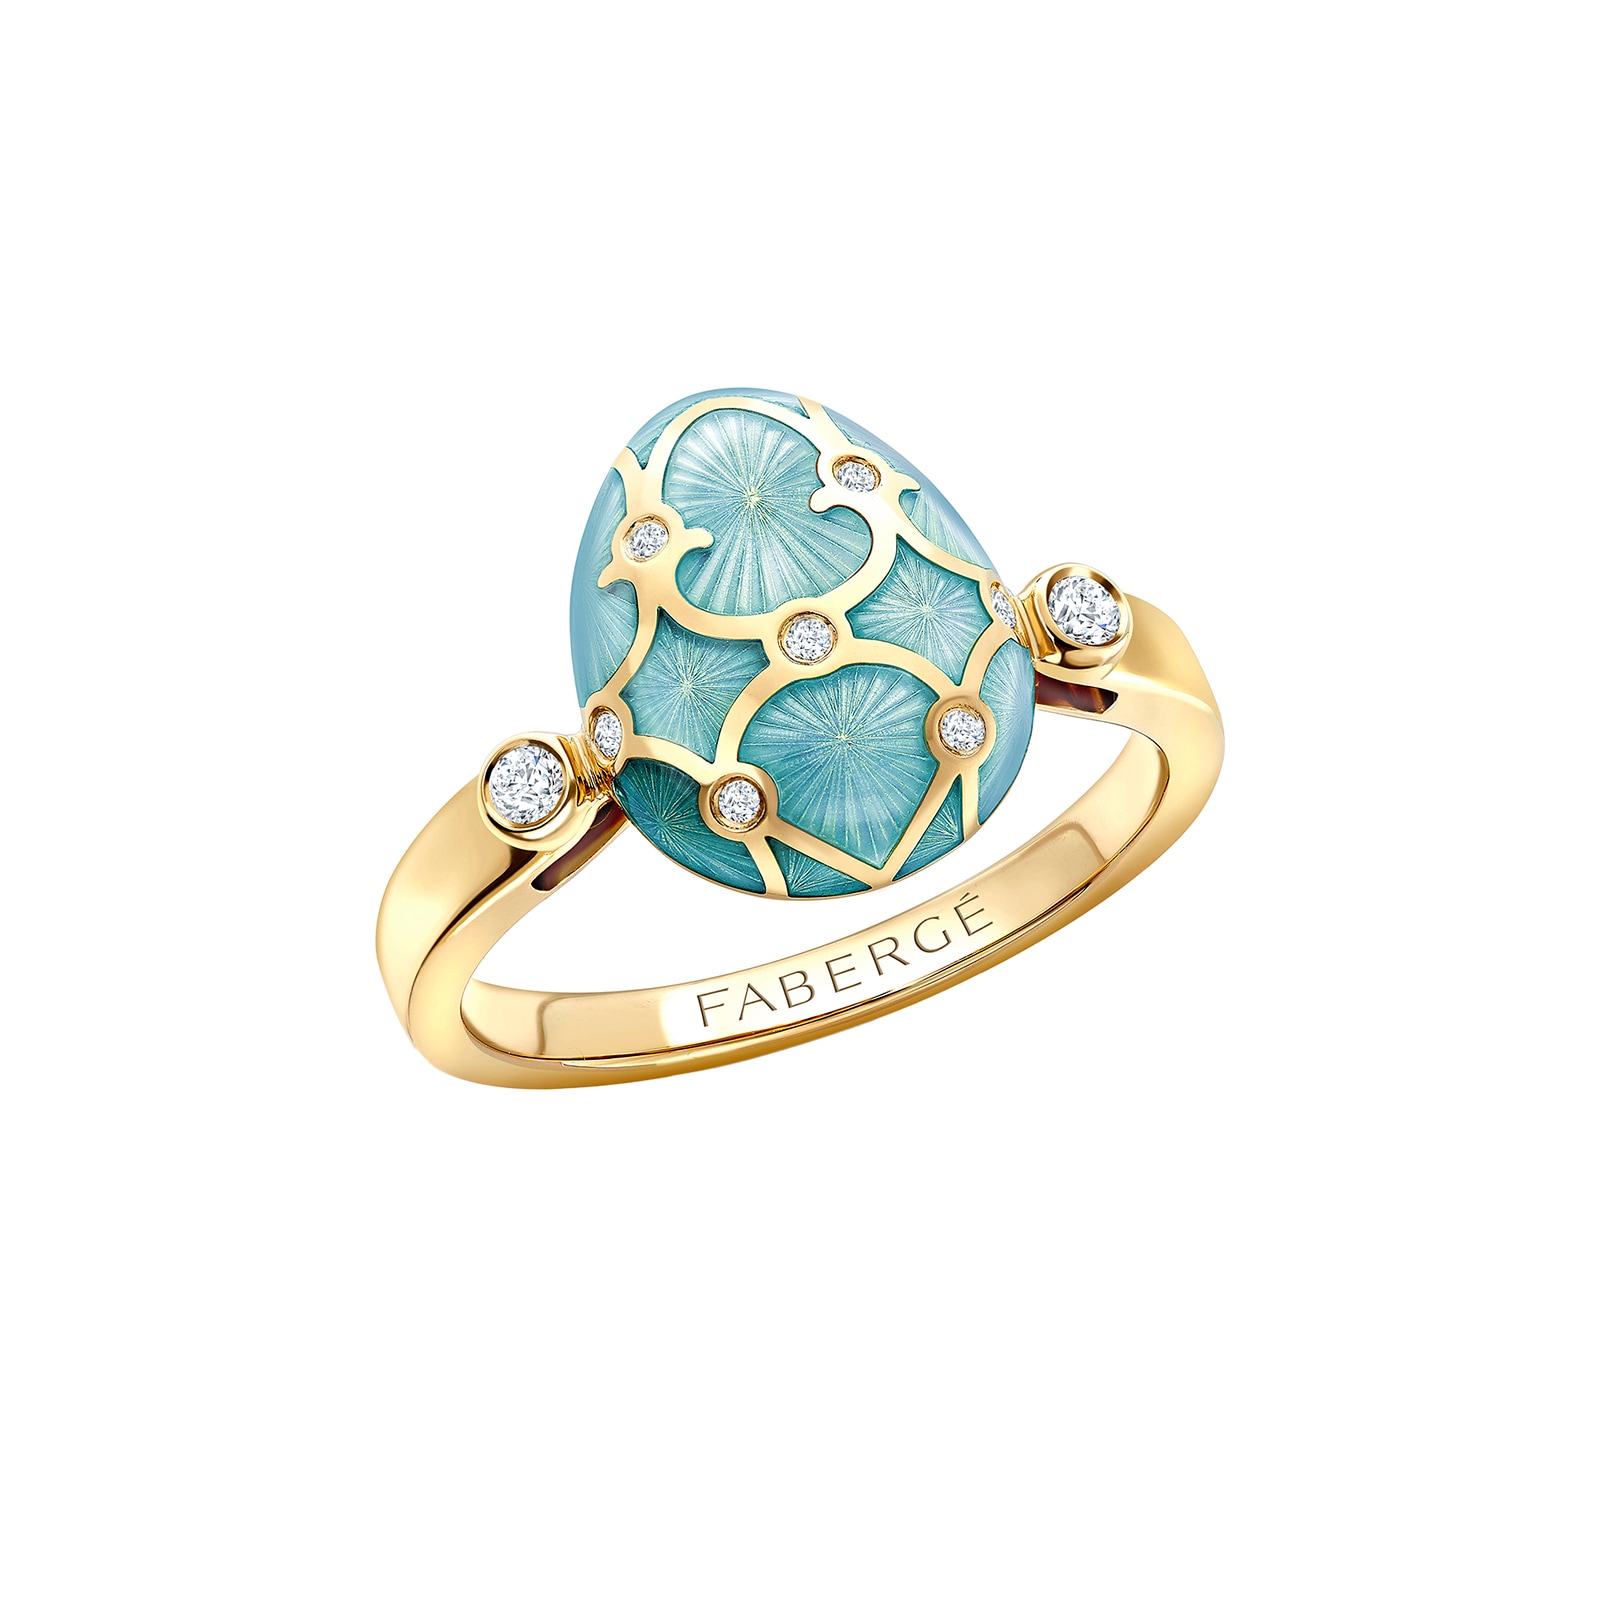 Heritage 18ct Yellow Gold Diamond & Tourquoise Enamel Egg Ring - Ring Size N